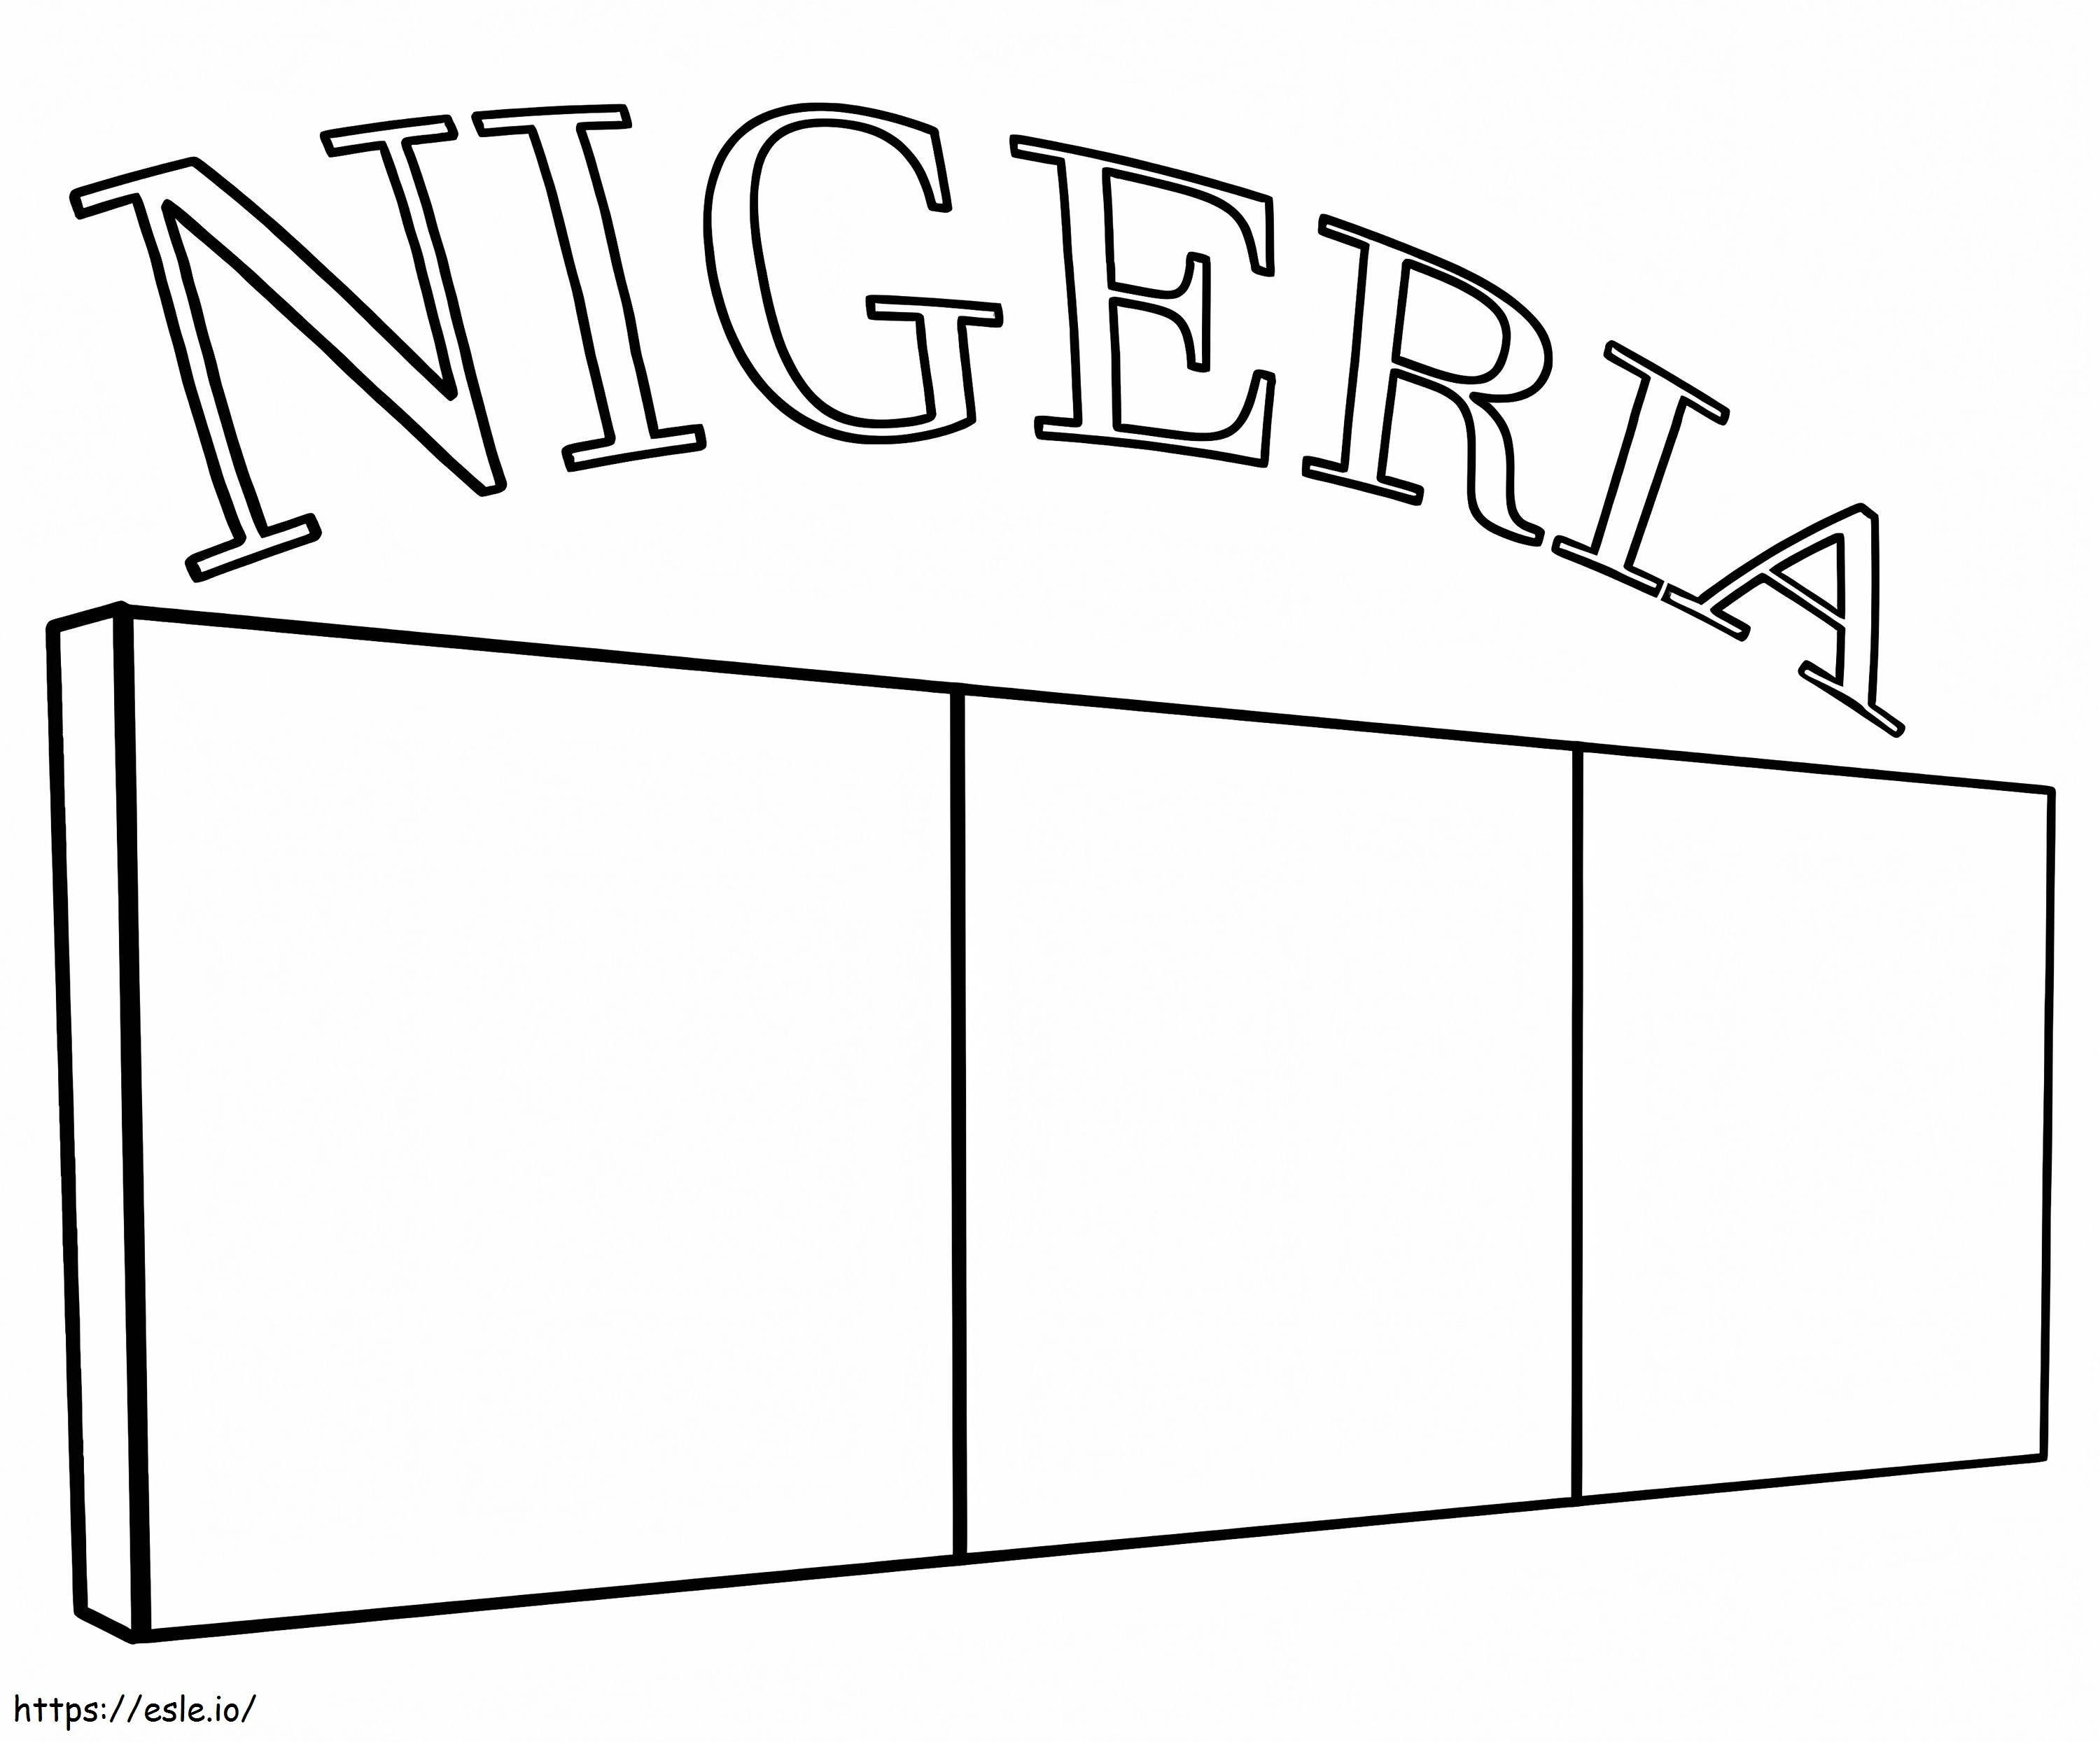 Nigeria Flag coloring page